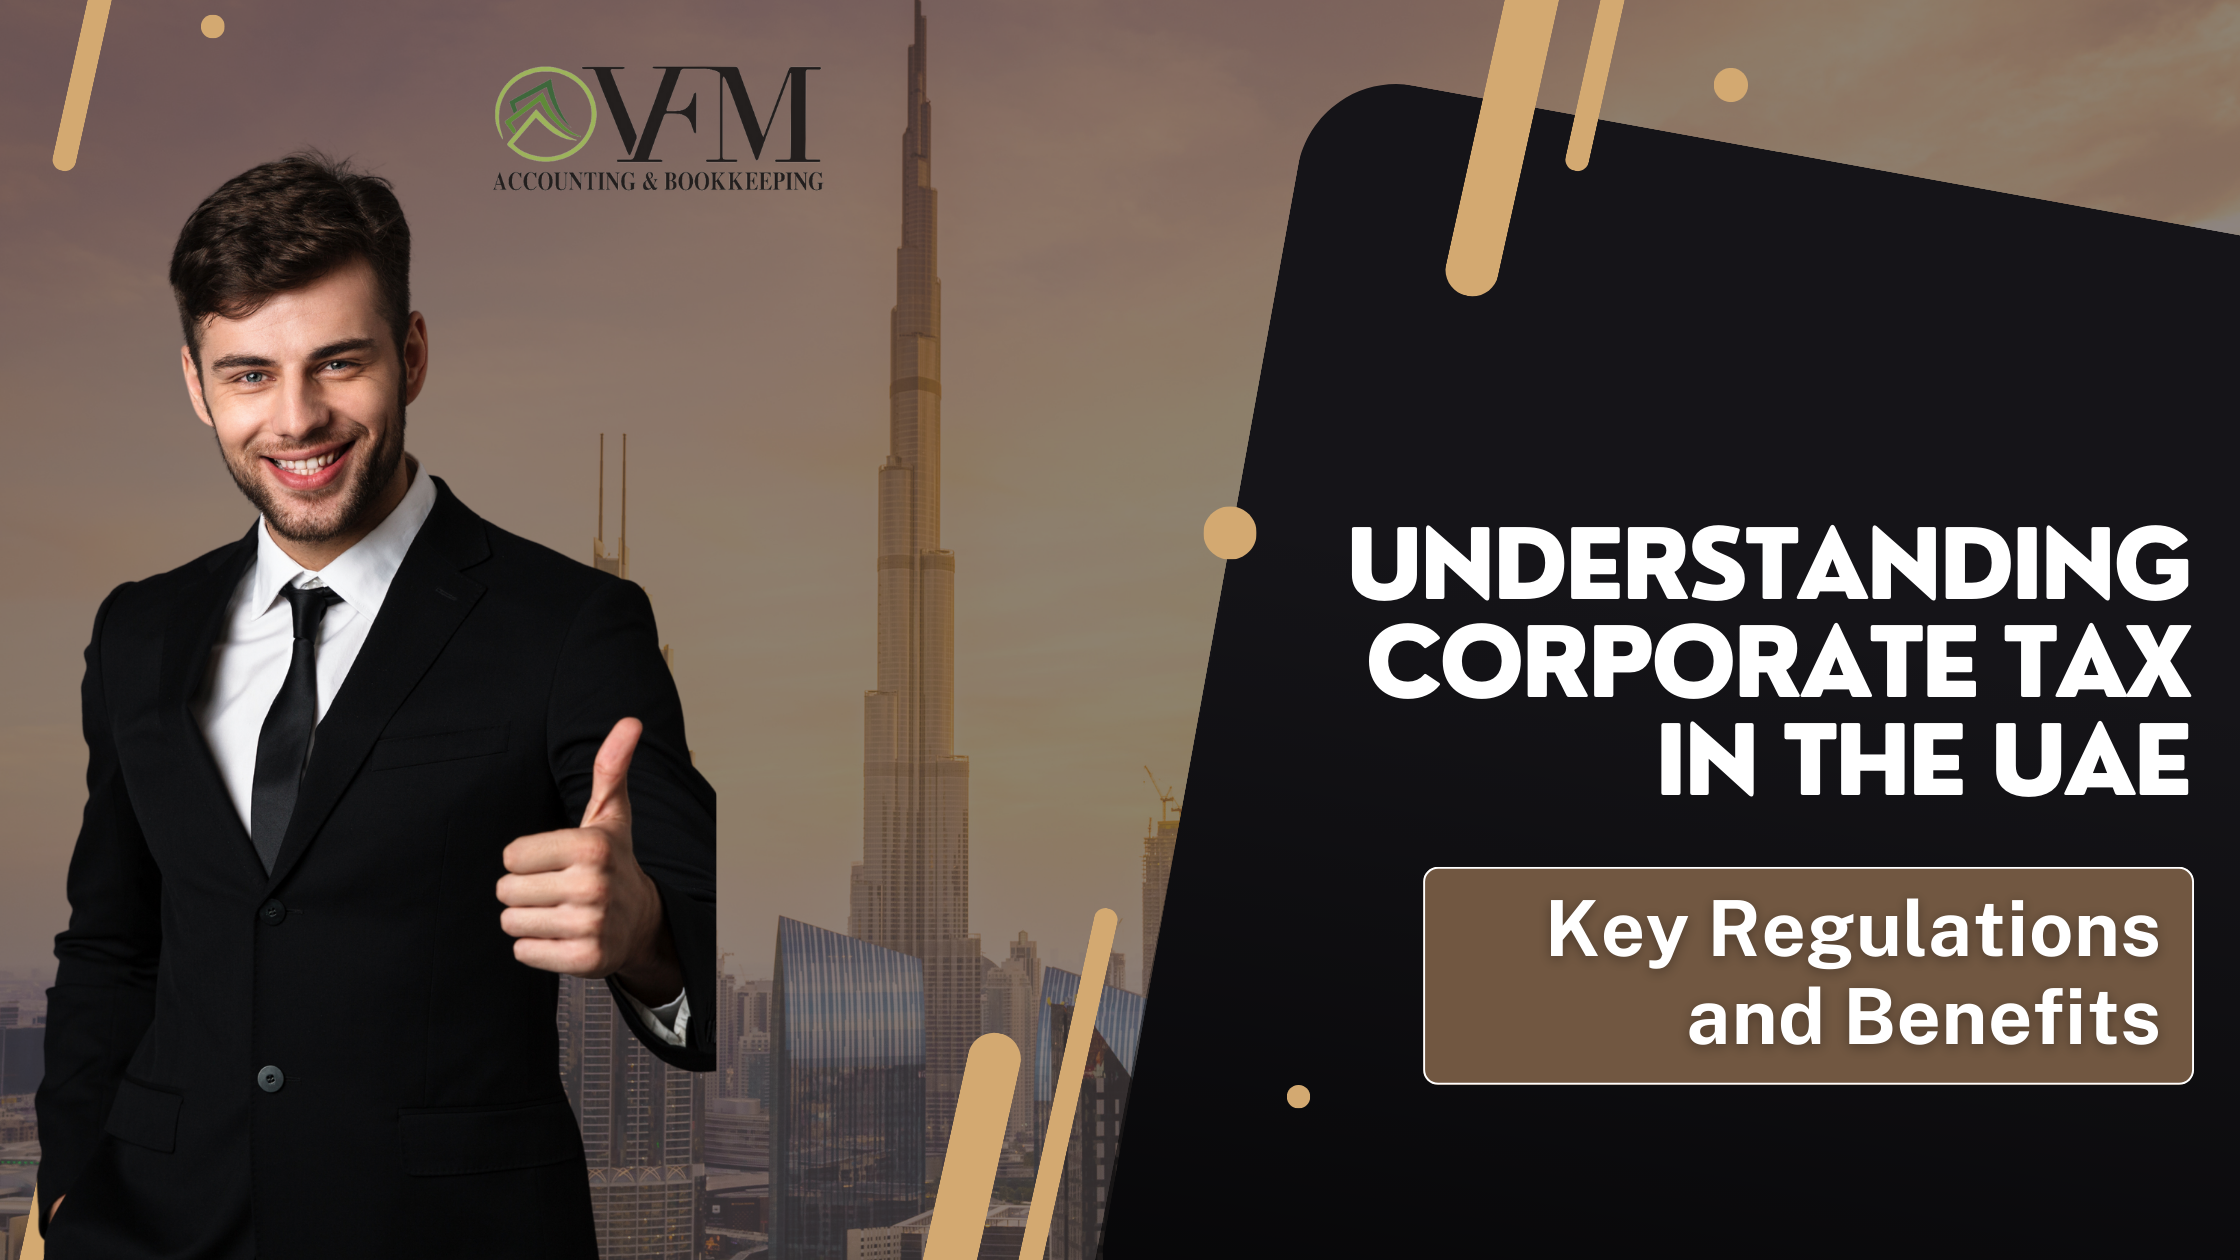 Understand Corporate Tax in the UAE